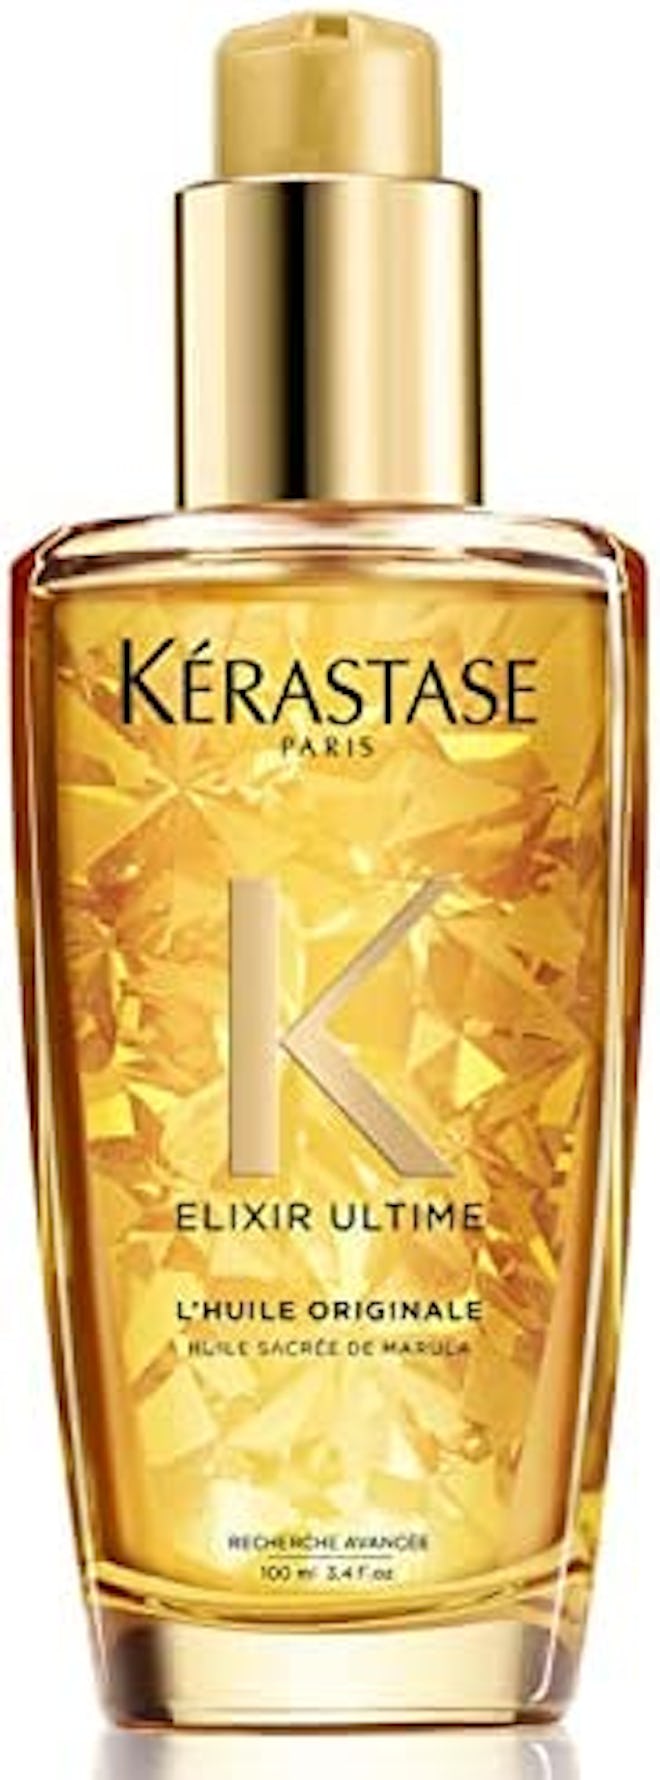 Kérastase Elixir Ultime Hydrating Hair Oil Serum